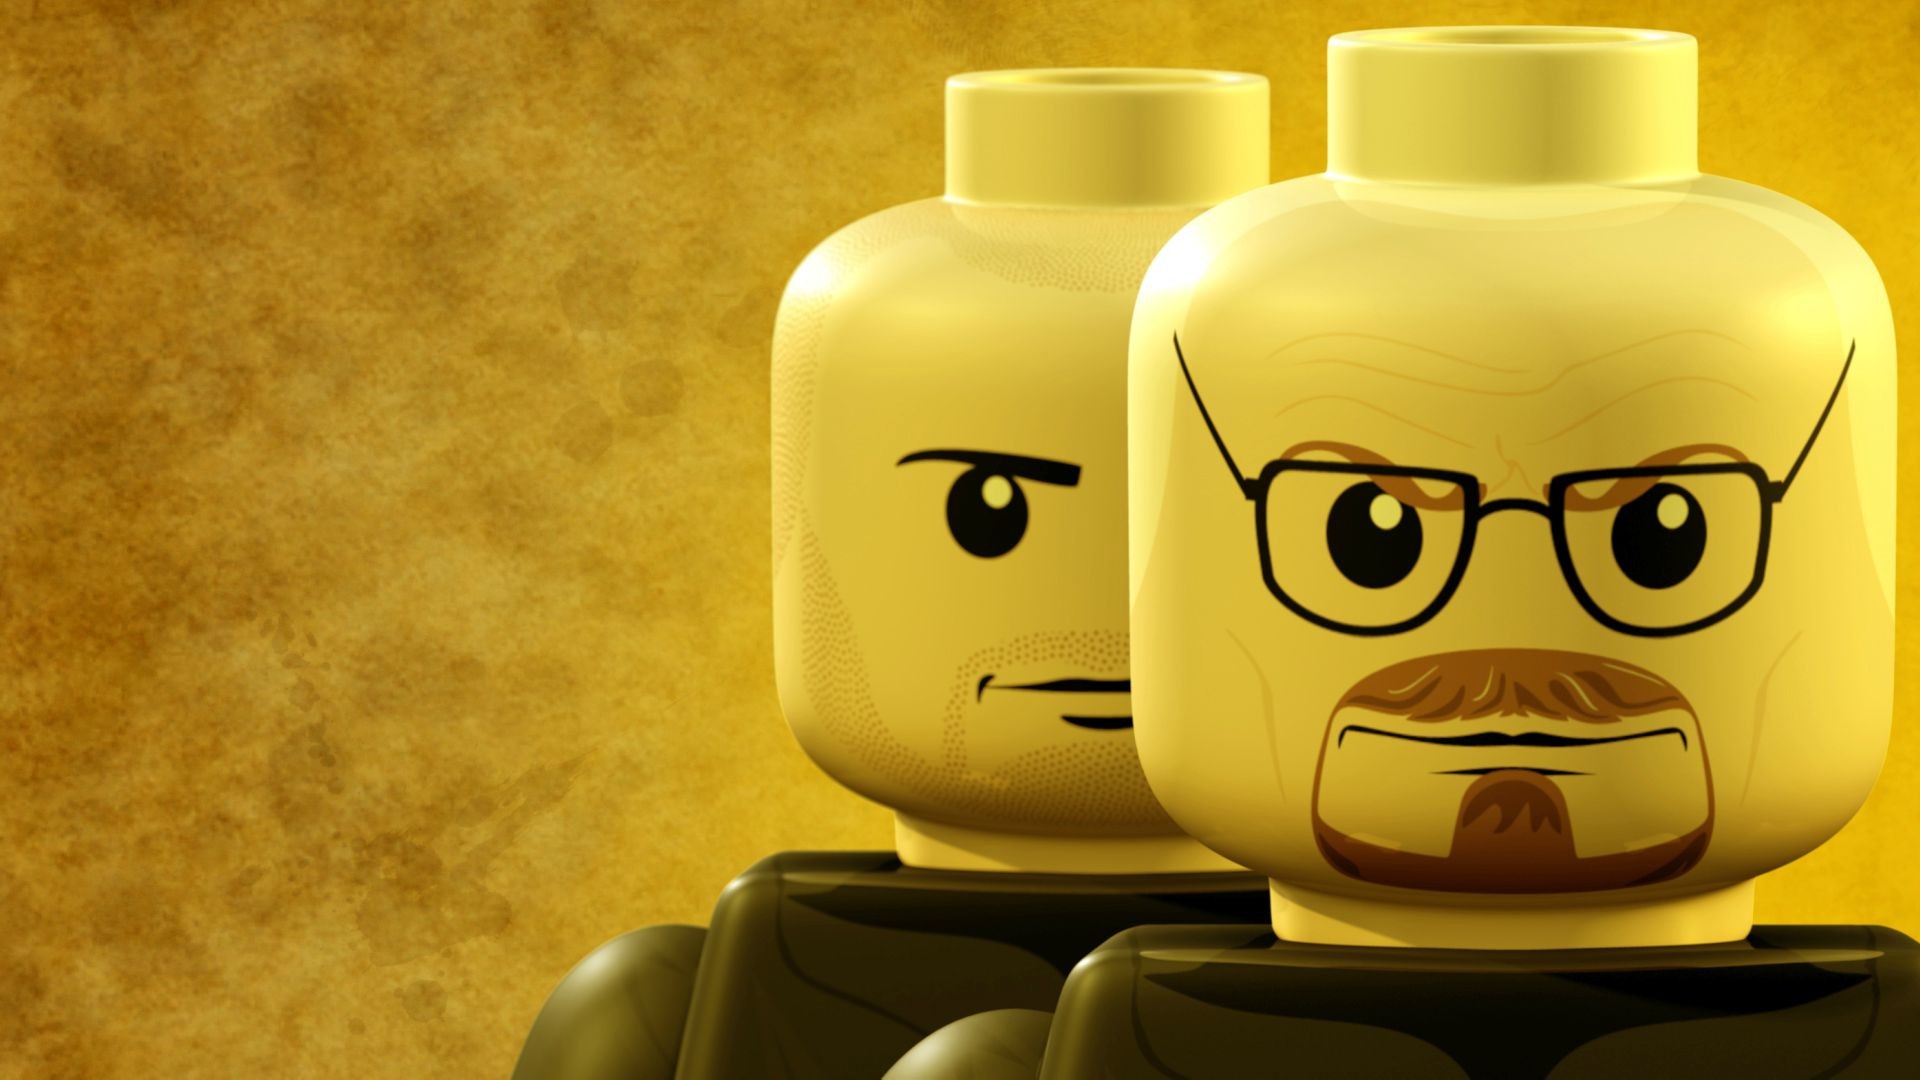 General 1920x1080 Breaking Bad LEGO parody TV series yellow background yellow Heisenberg